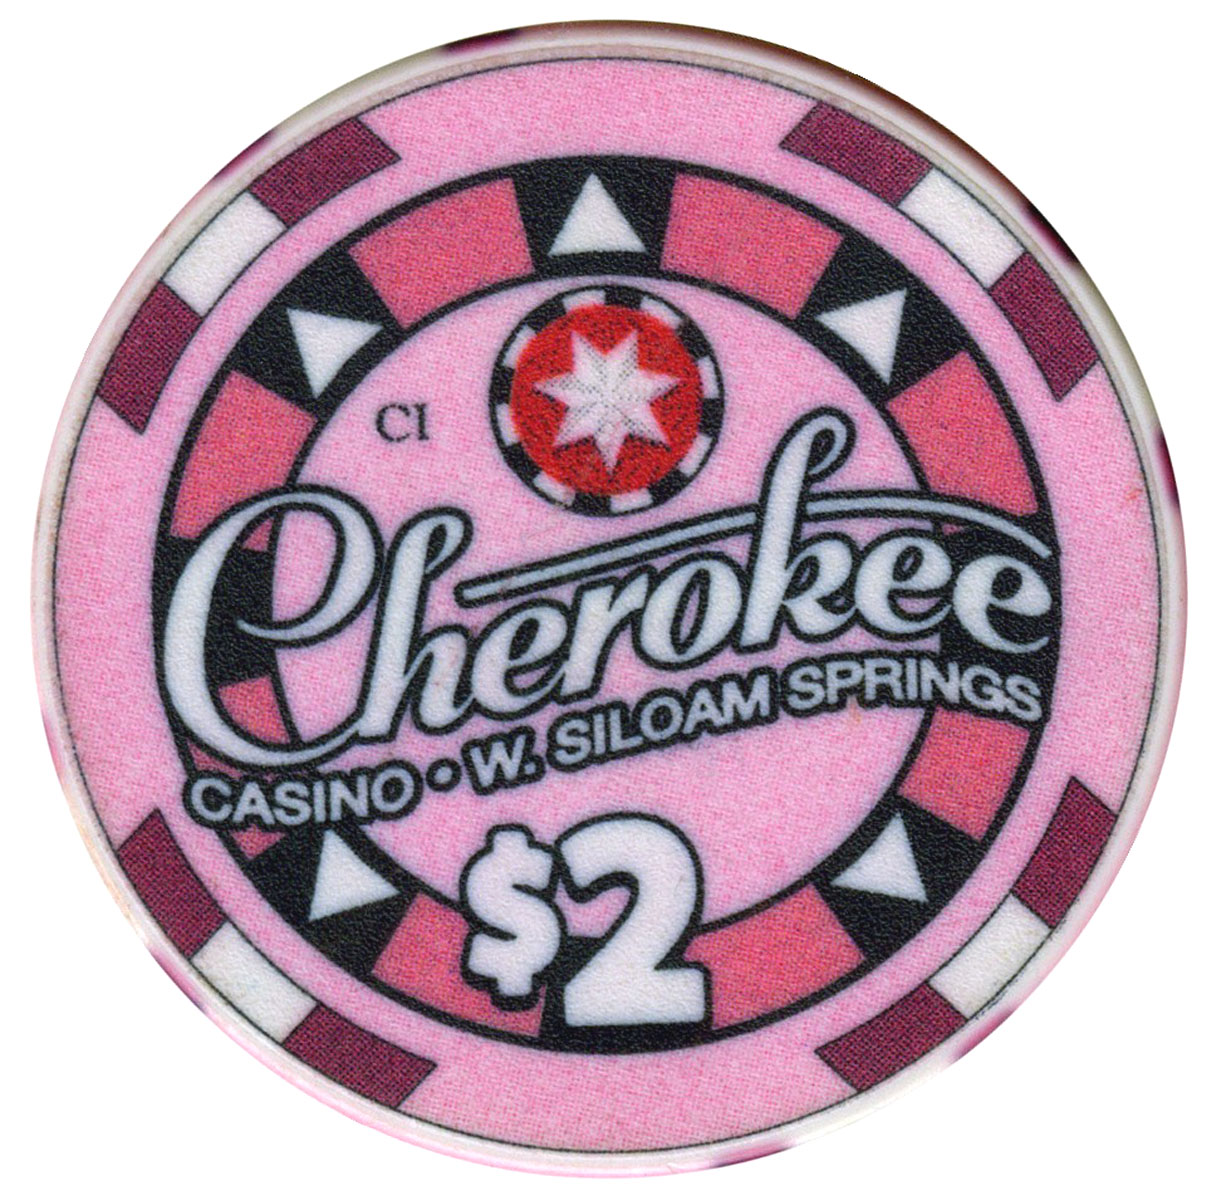 smart watch cherokee casino west siloam springs